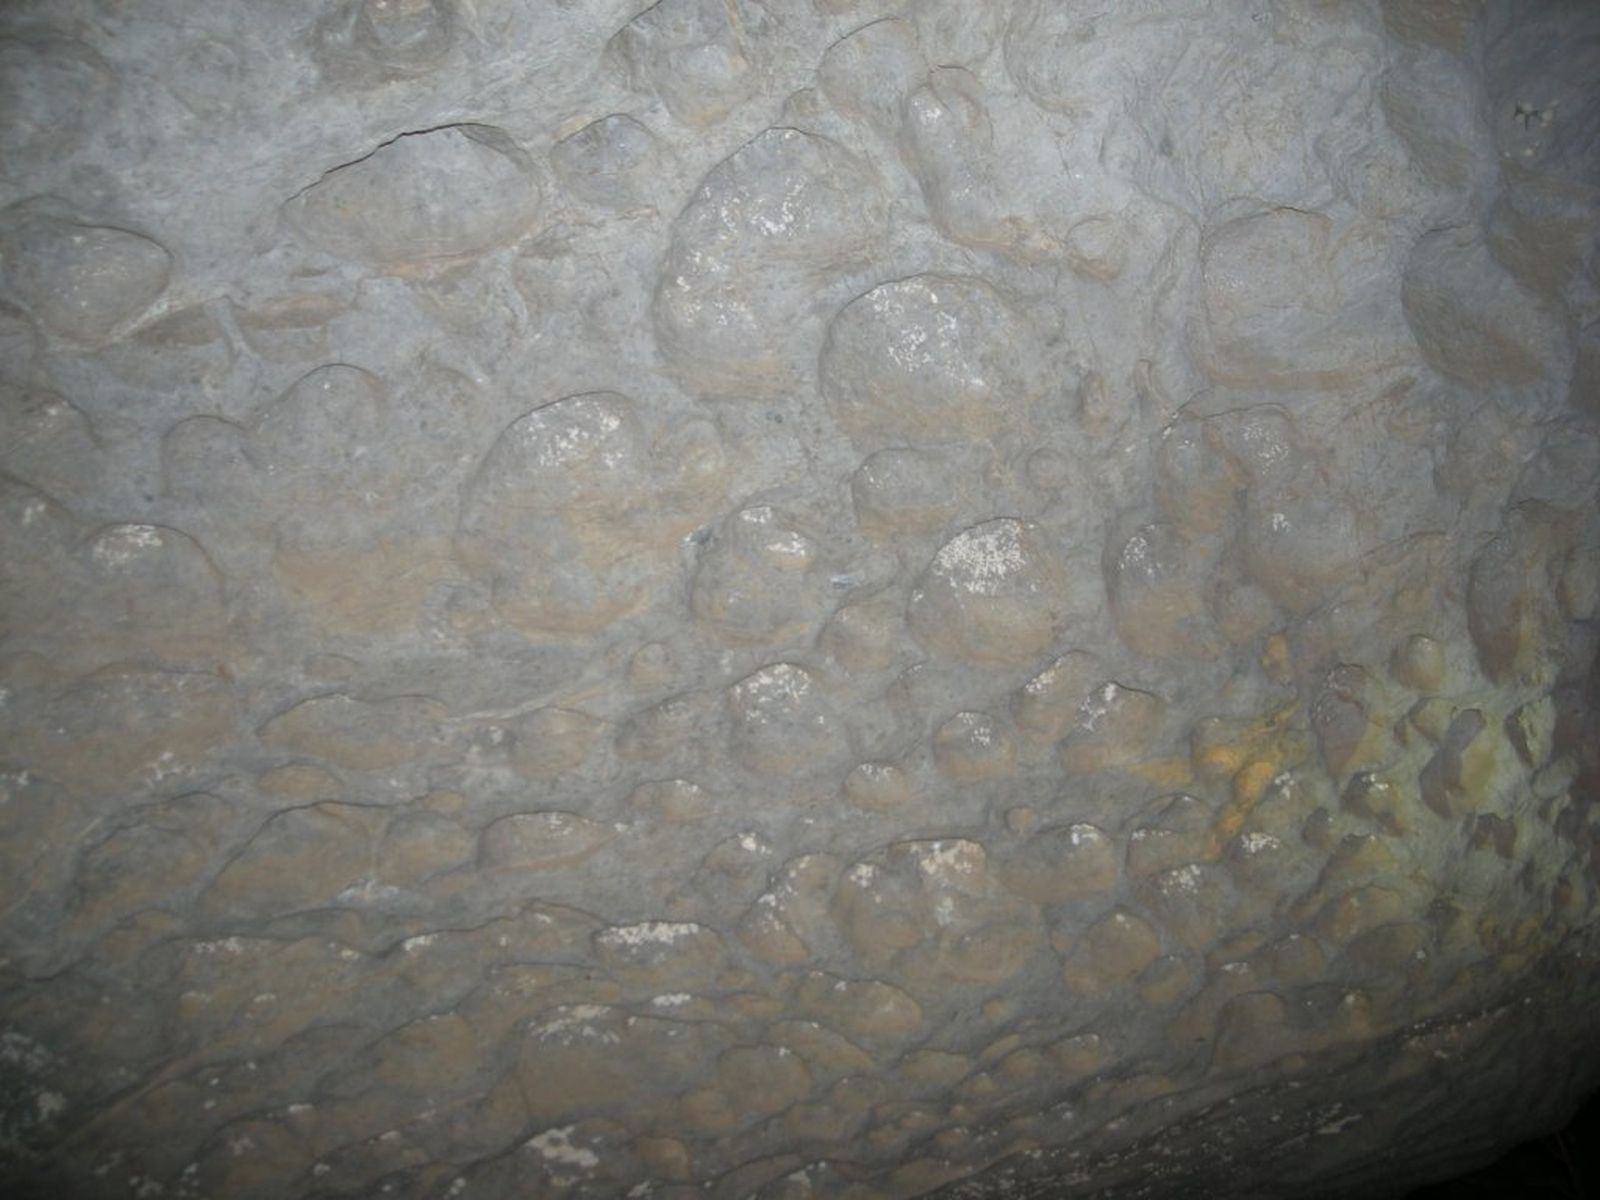 140 - Domusnovas - Grotta di San Giovanni